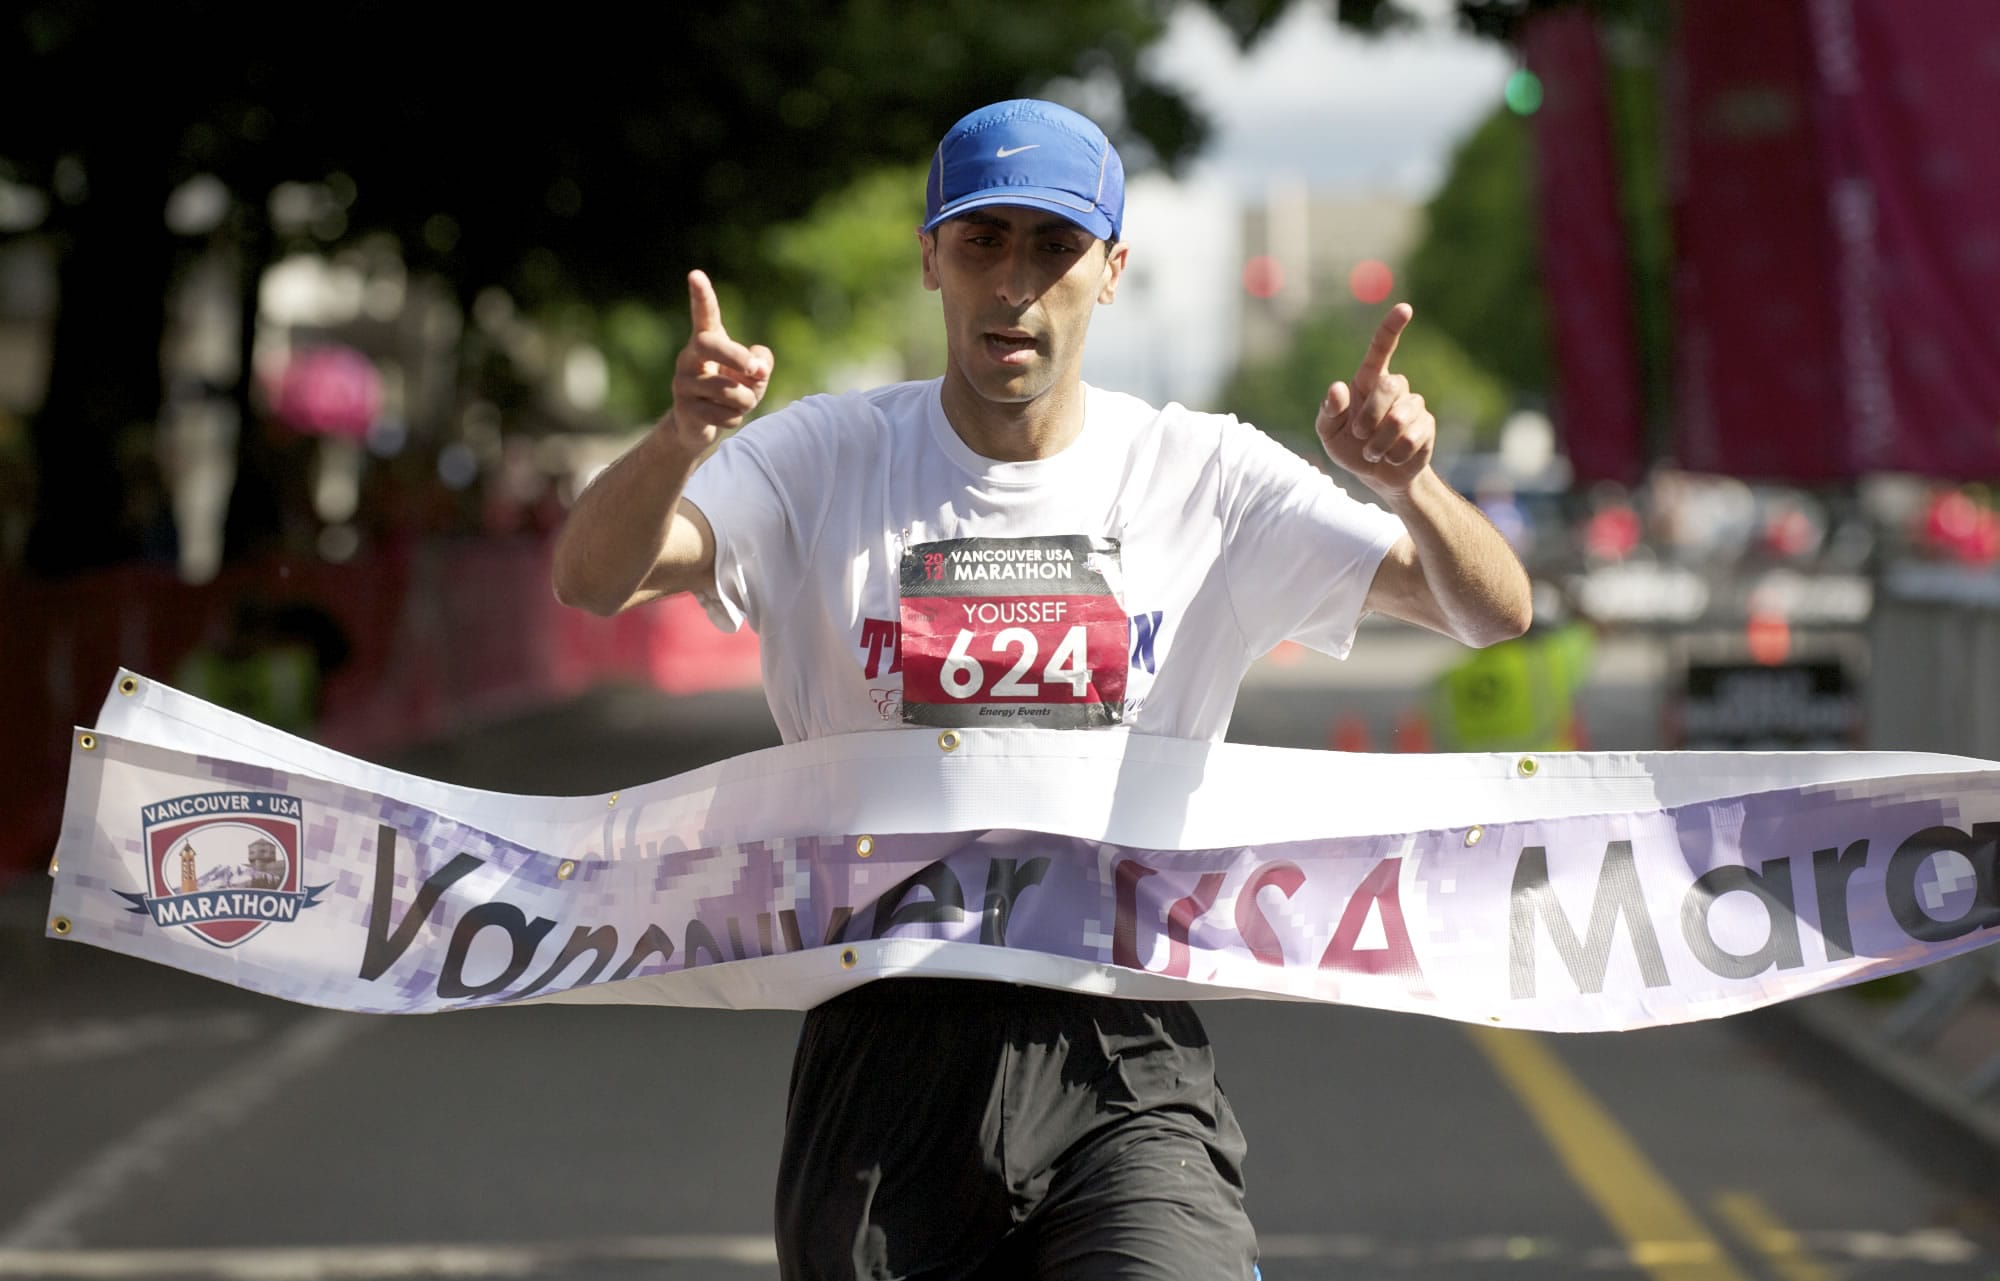 Yossef Zirari wins Vancouver USA Marathon in 2 hours, 24 minutes, 34 seconds (unofficial).